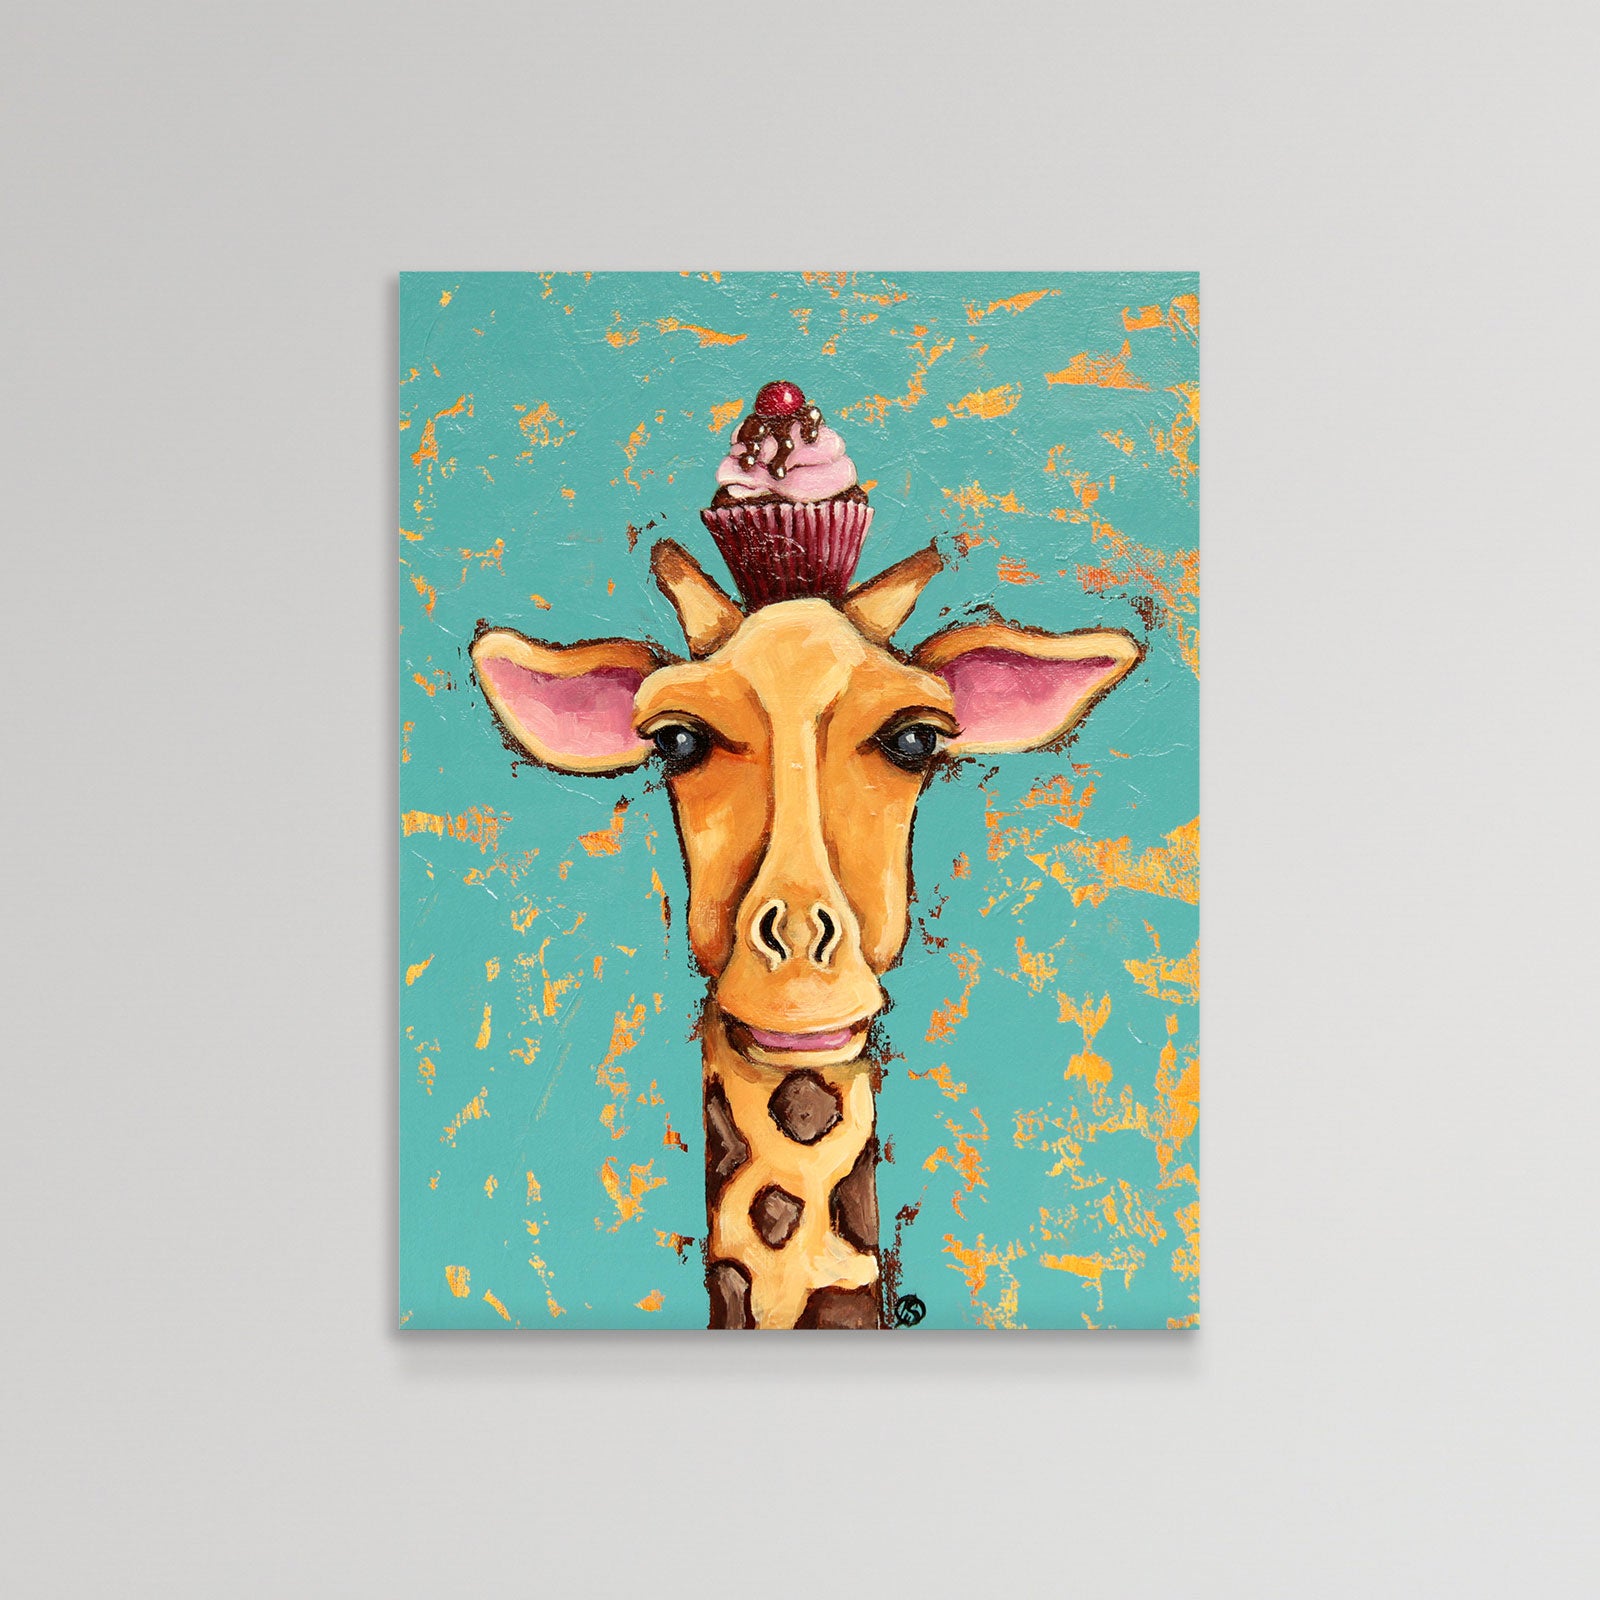 Giraffe With Cherry on Top